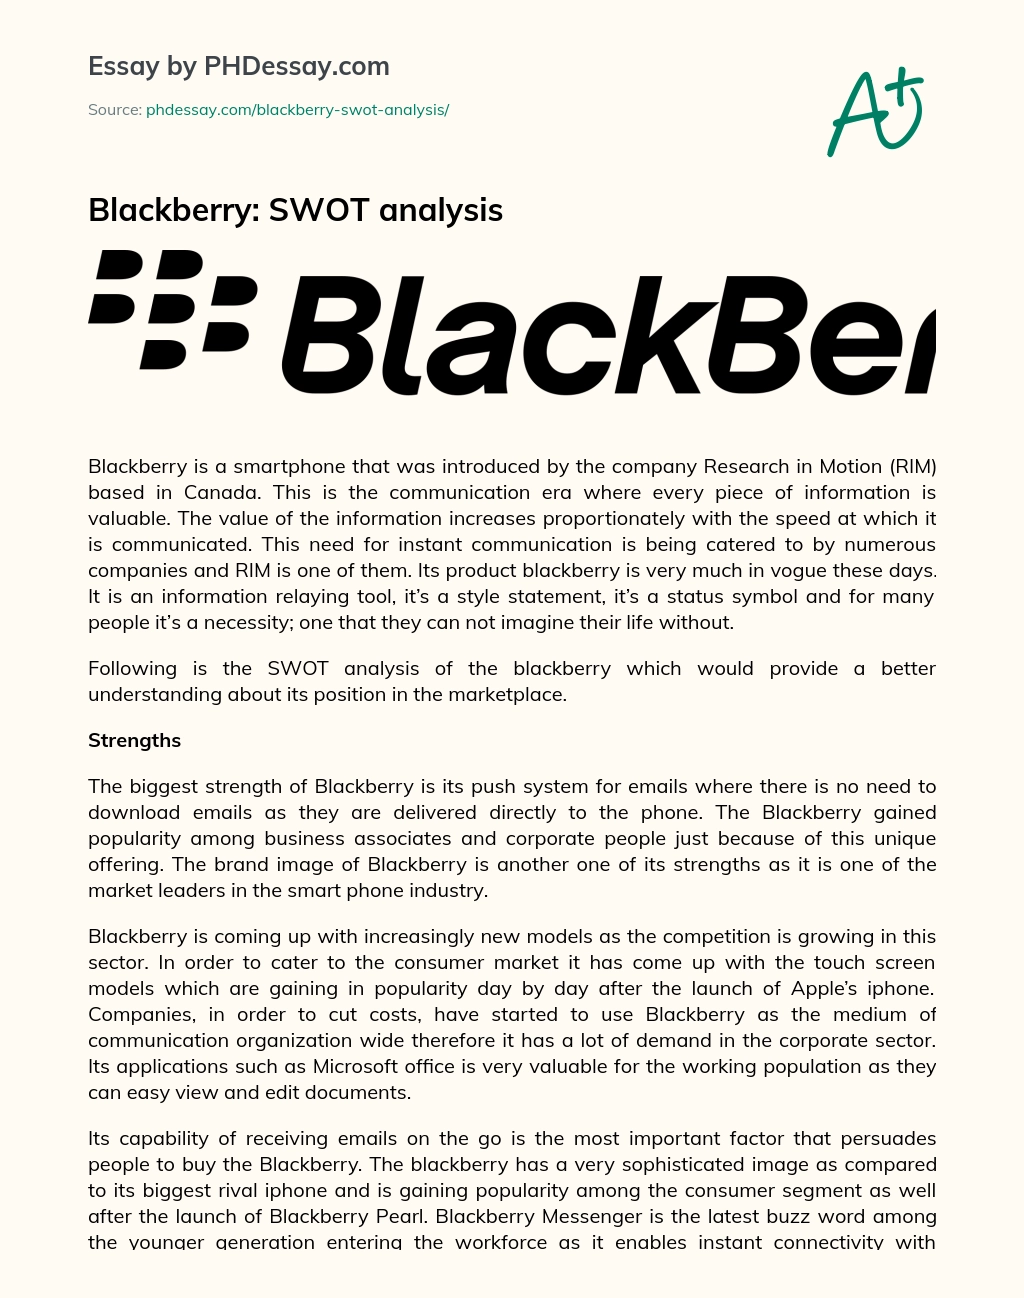 Blackberry: SWOT analysis essay